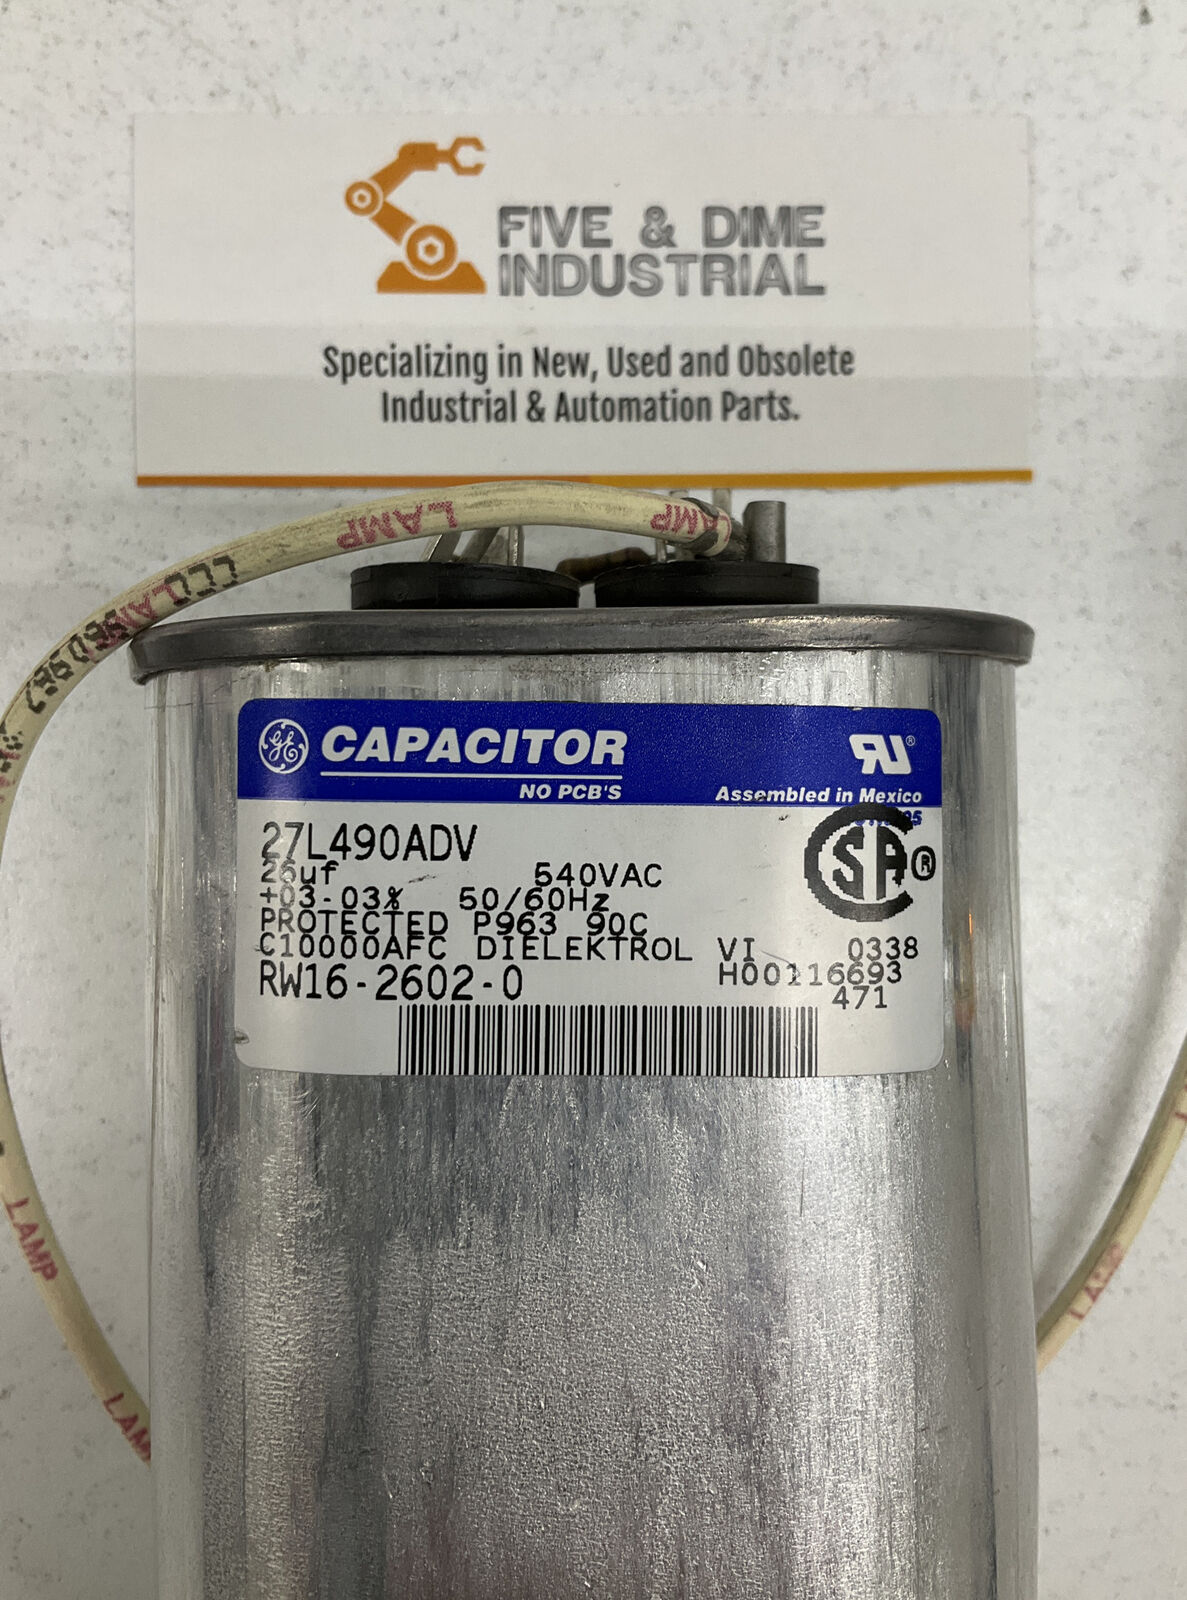 GE Capacitor 27L490ADV 26µf +03 - 03% 50/60 Hz  540VAC (BL206)